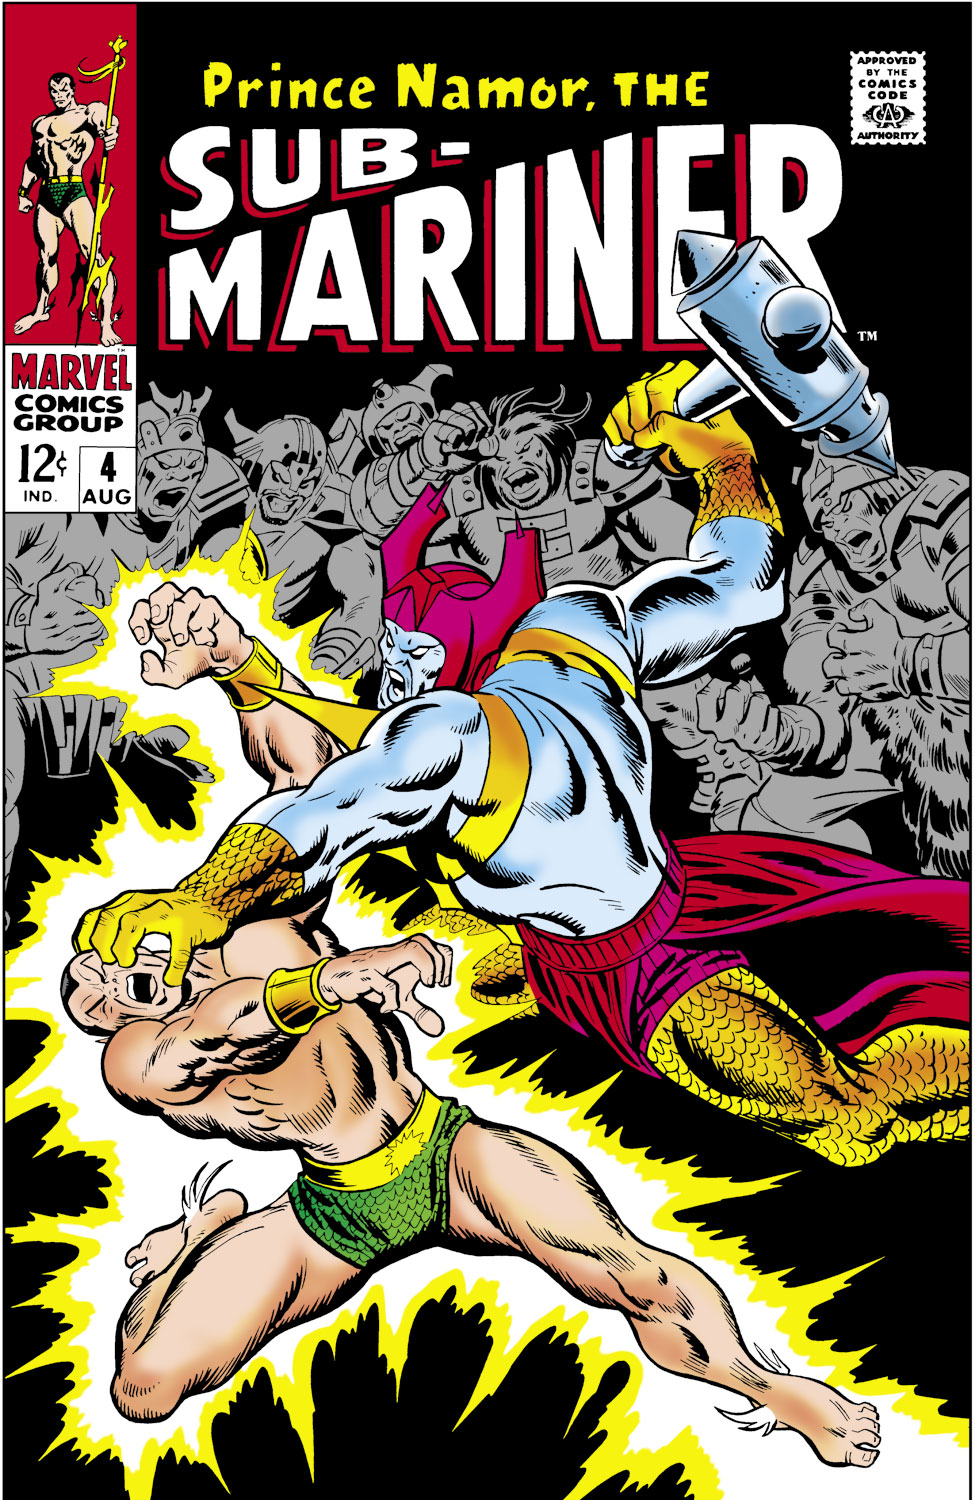 Sub-Mariner (1968) #4